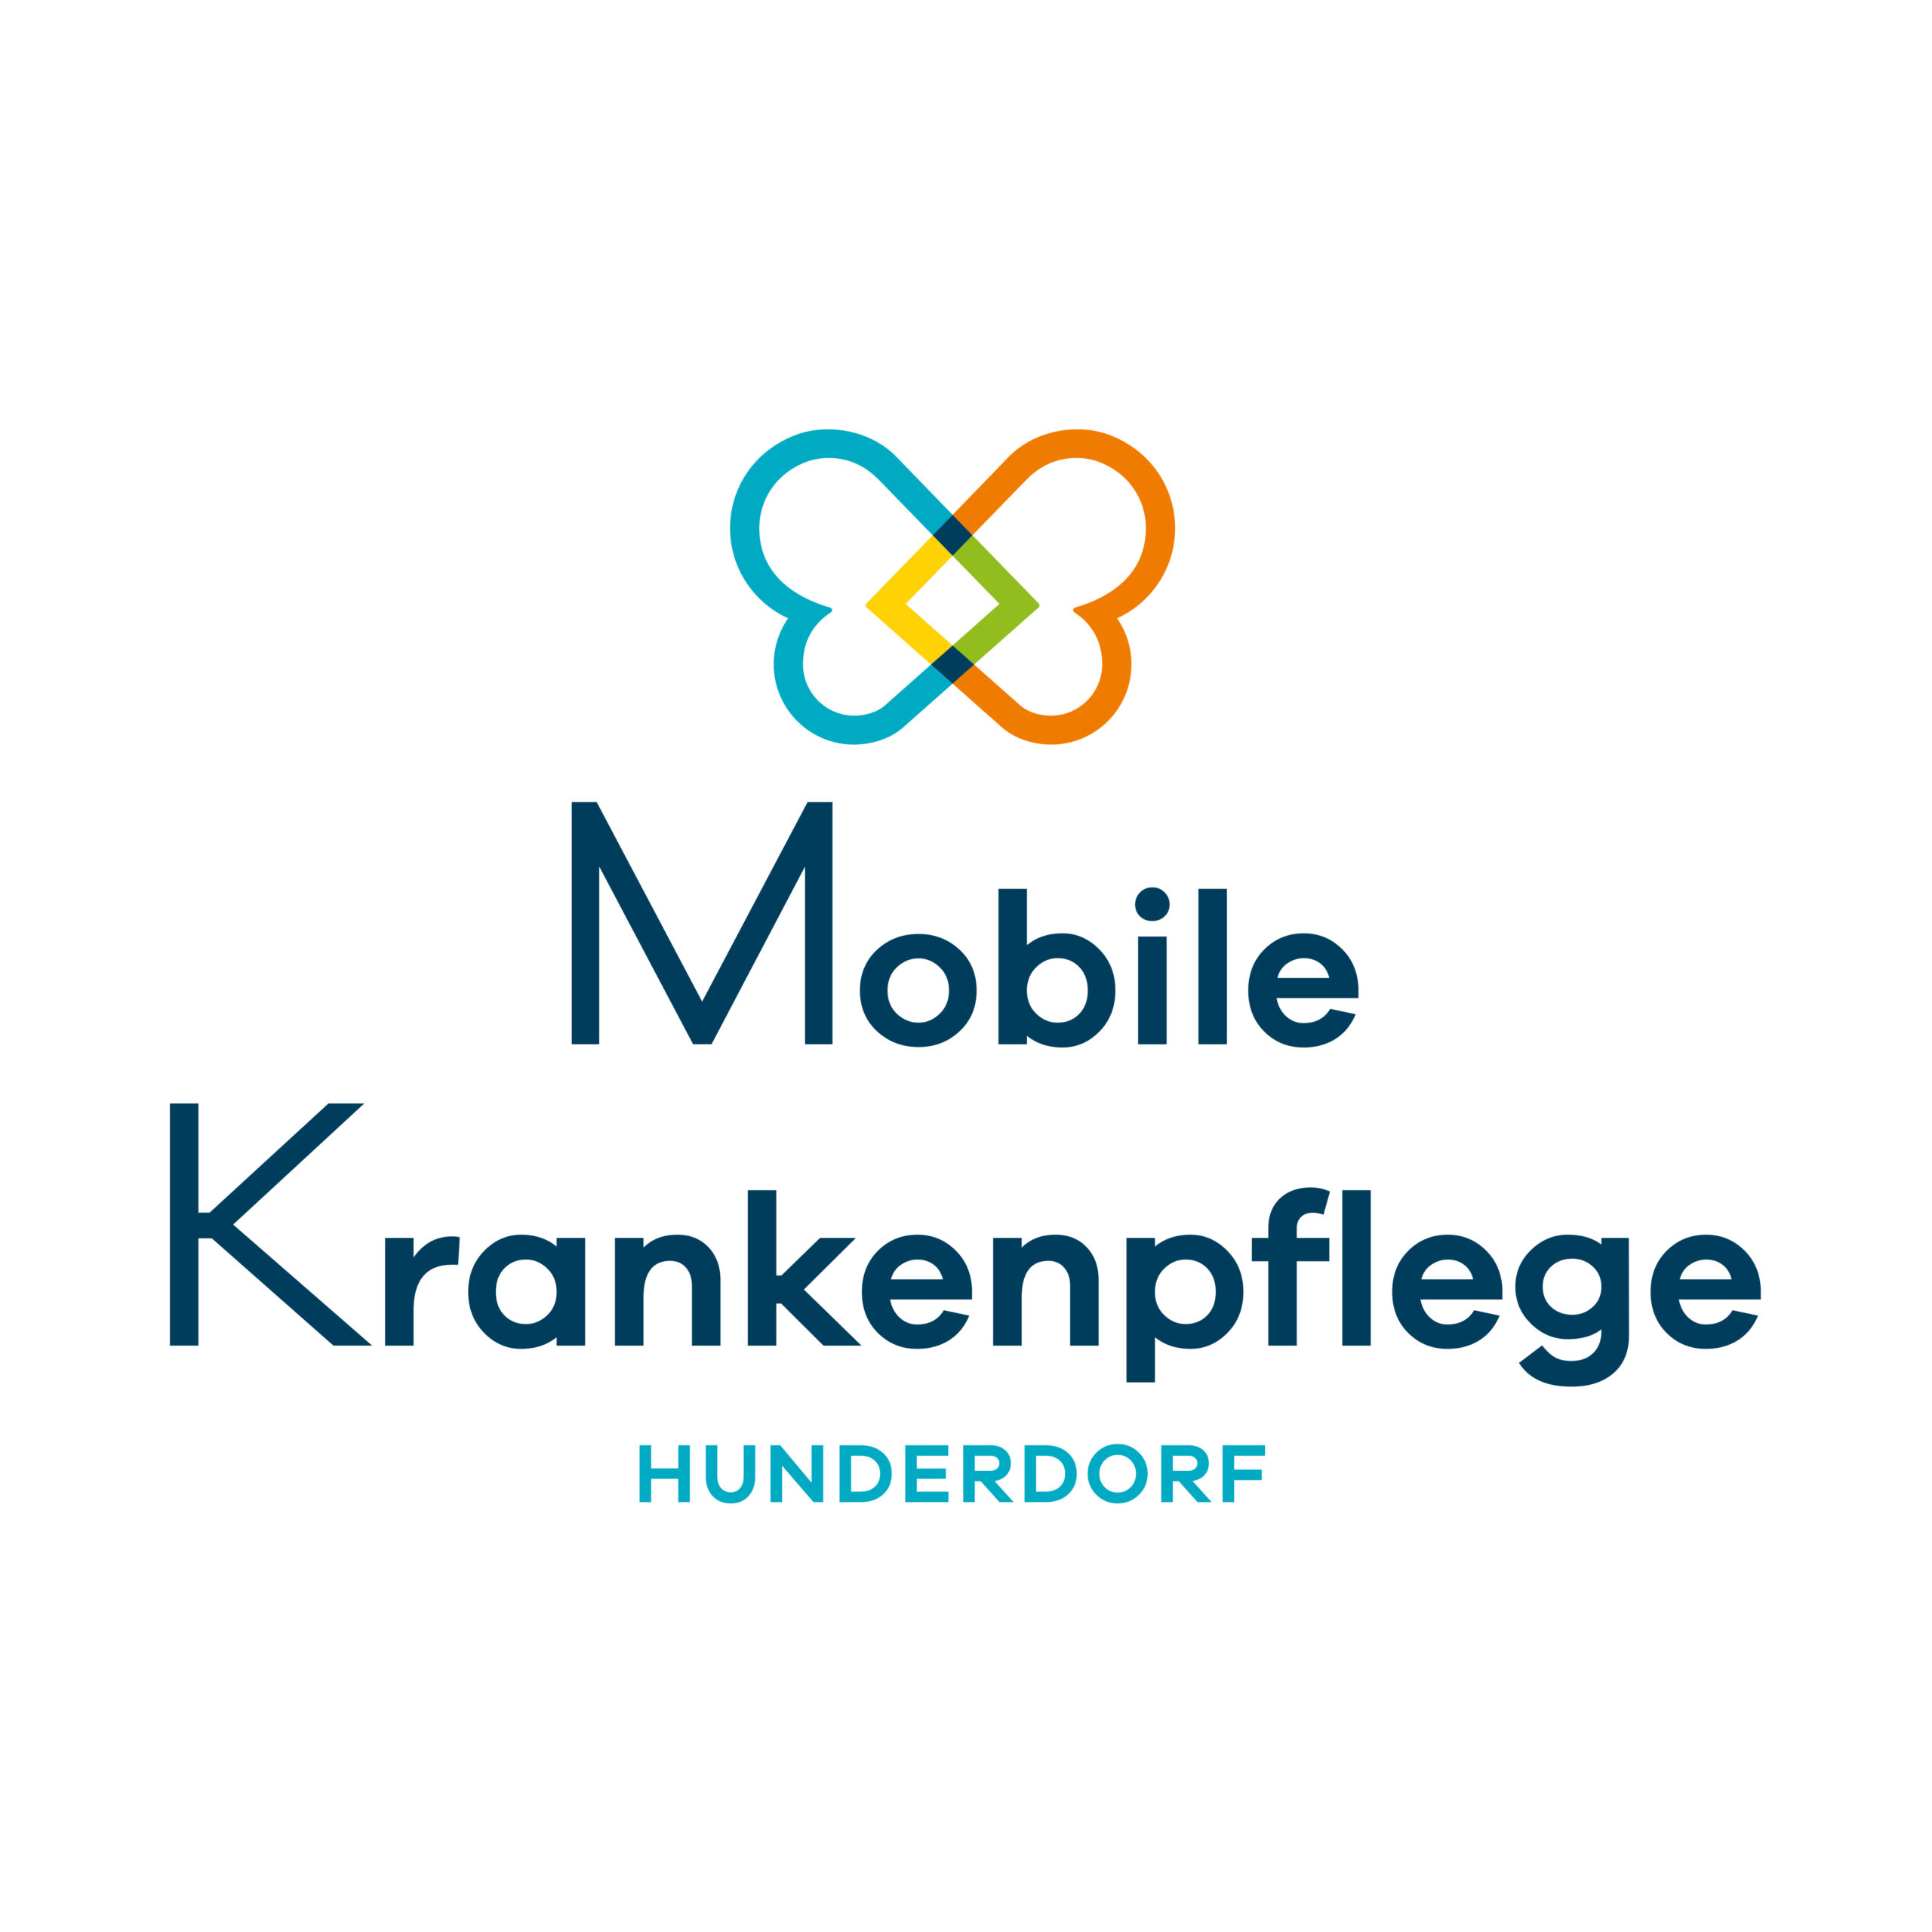 Mobile Krankenpflege Hunderdorf in Hunderdorf - Logo